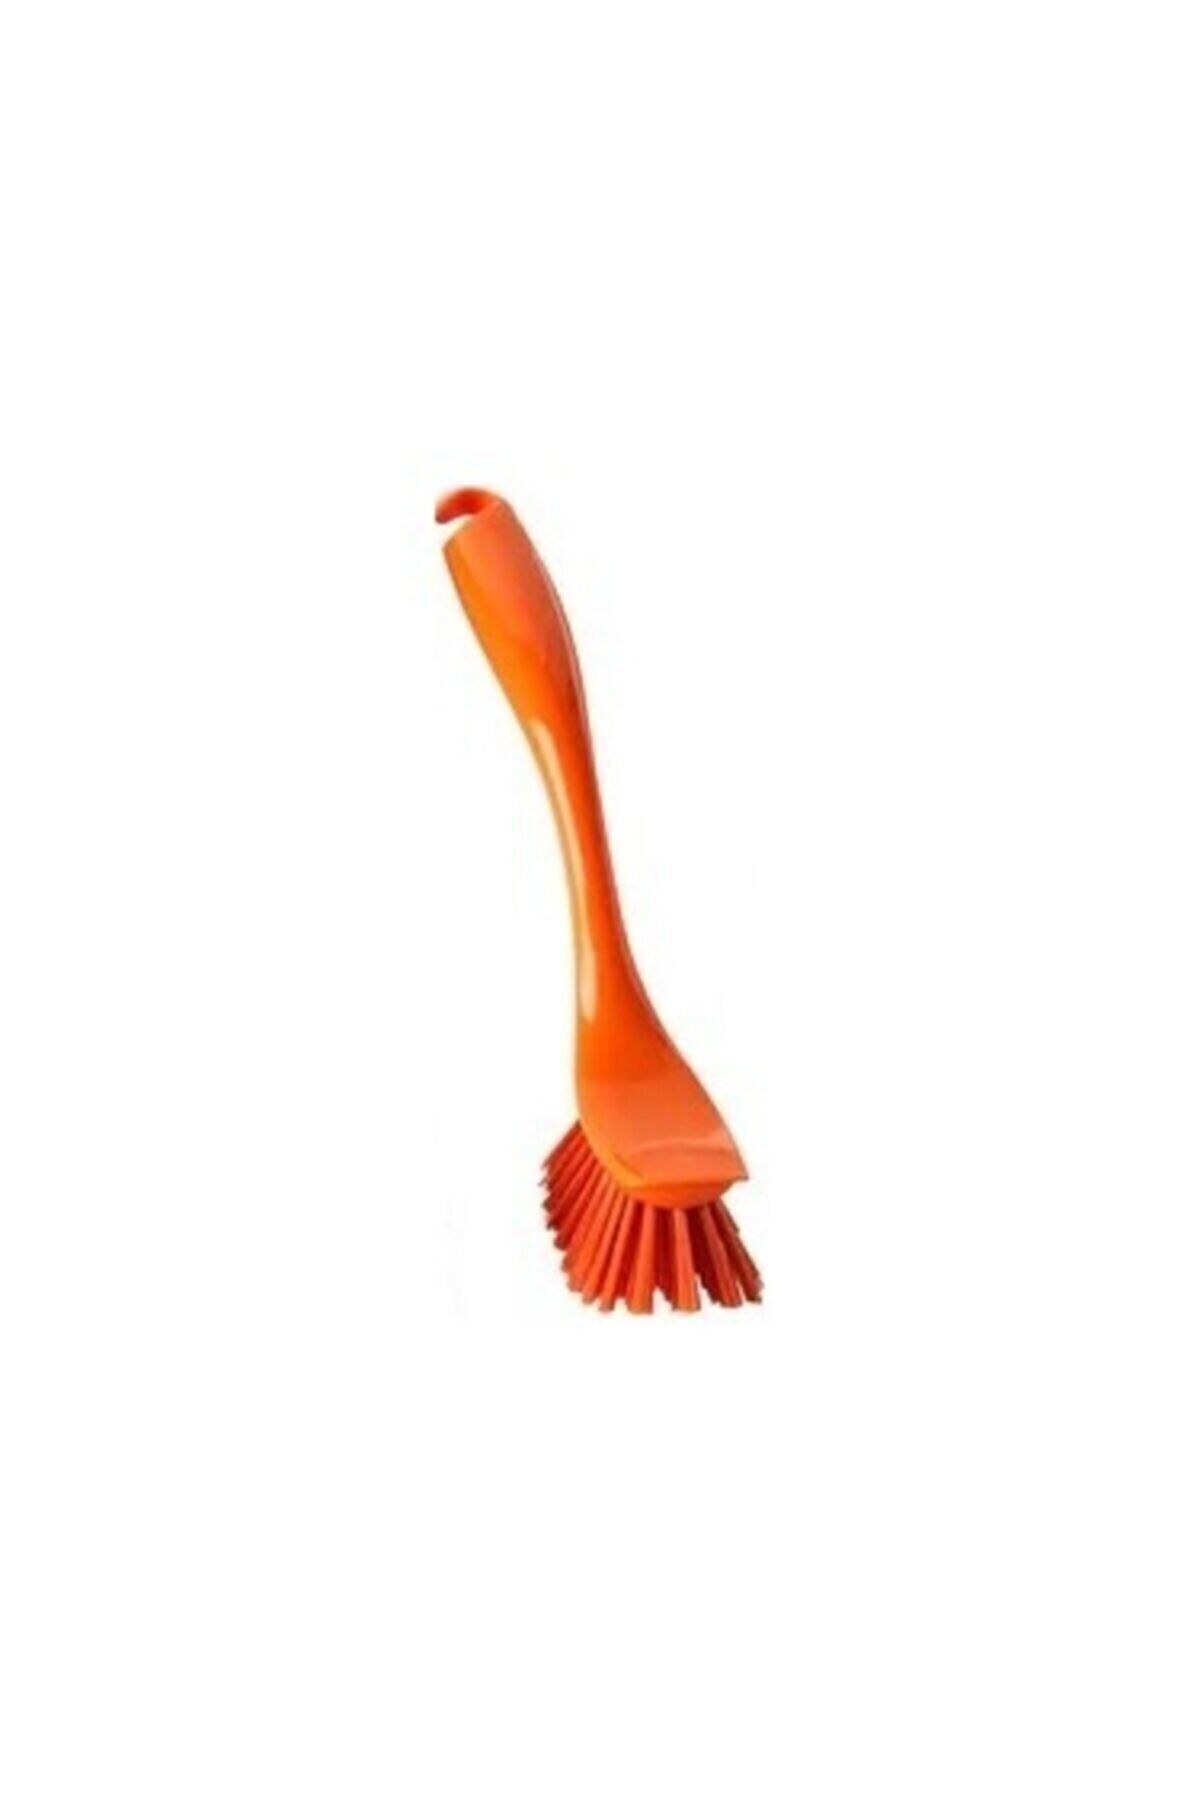 ANTAGEN Dish brush, bright orange - IKEA